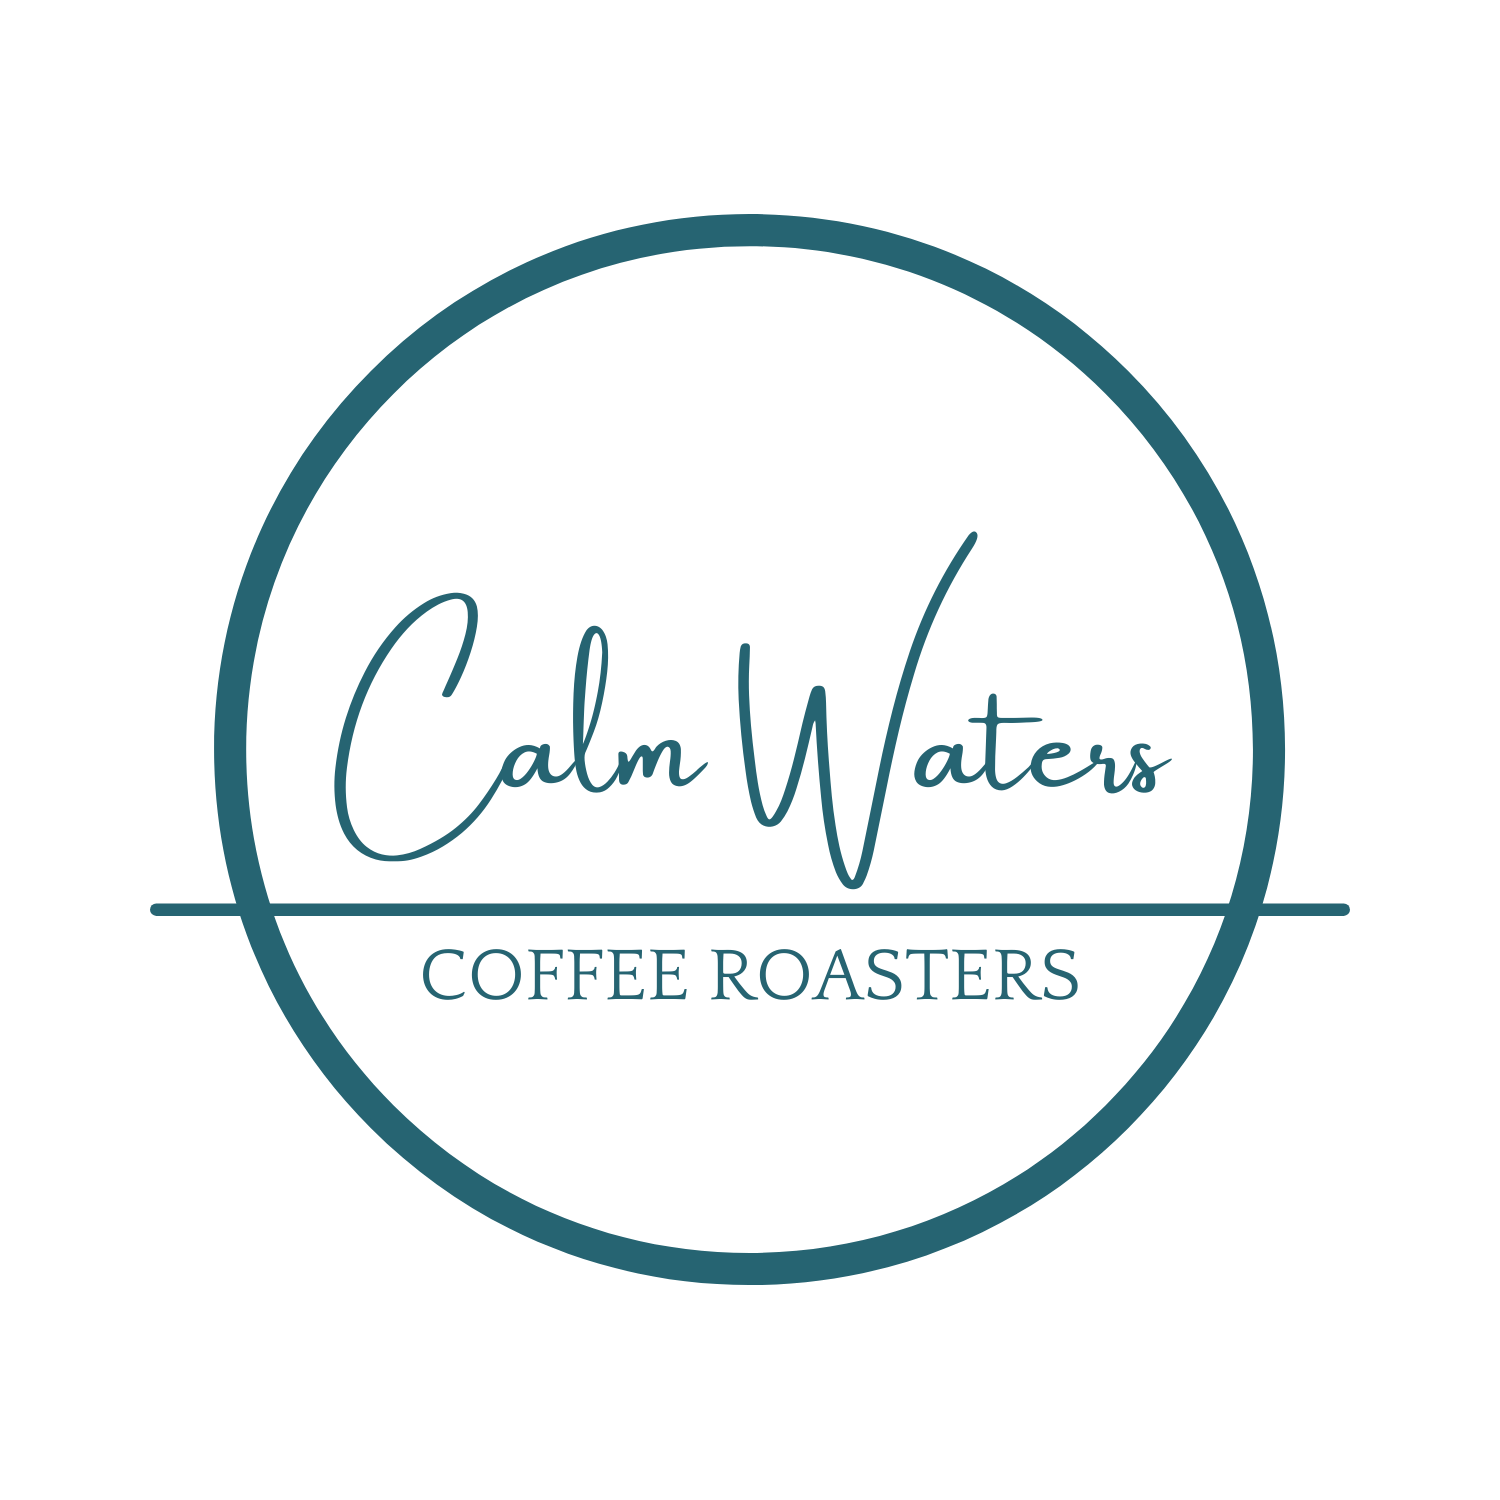 Calm Waters Coffee Roasters